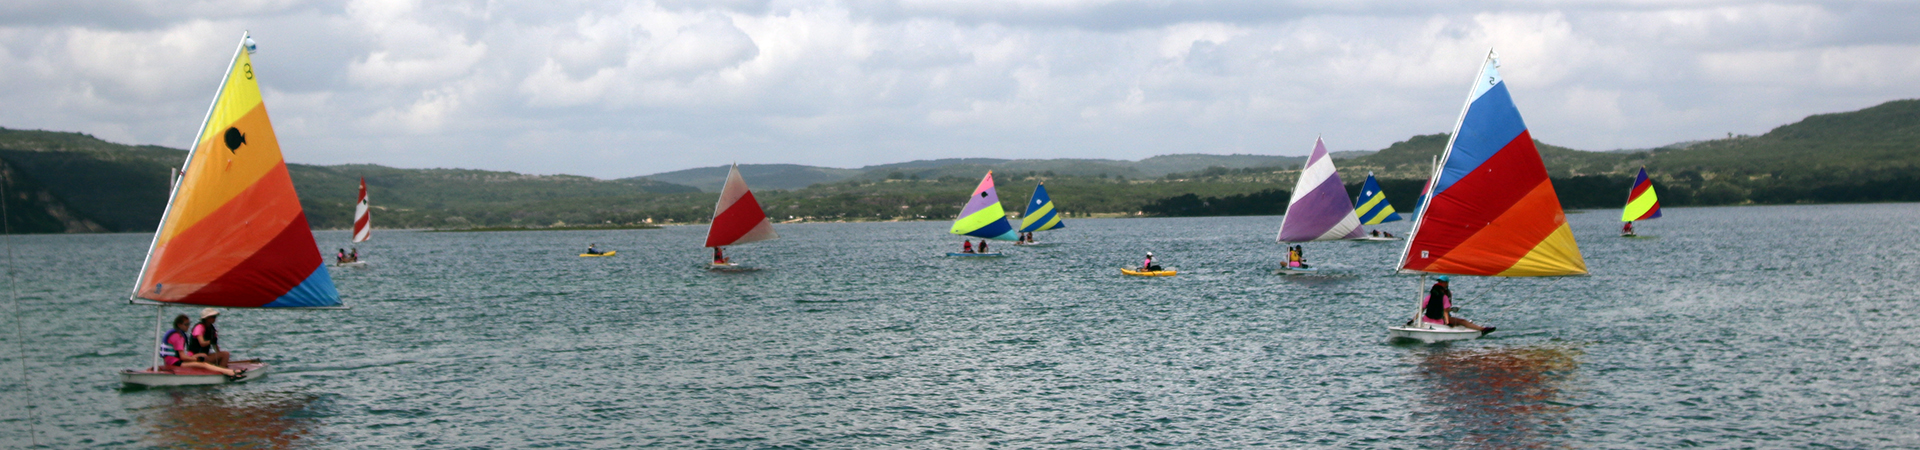  fleet of sailboats on medina lake 